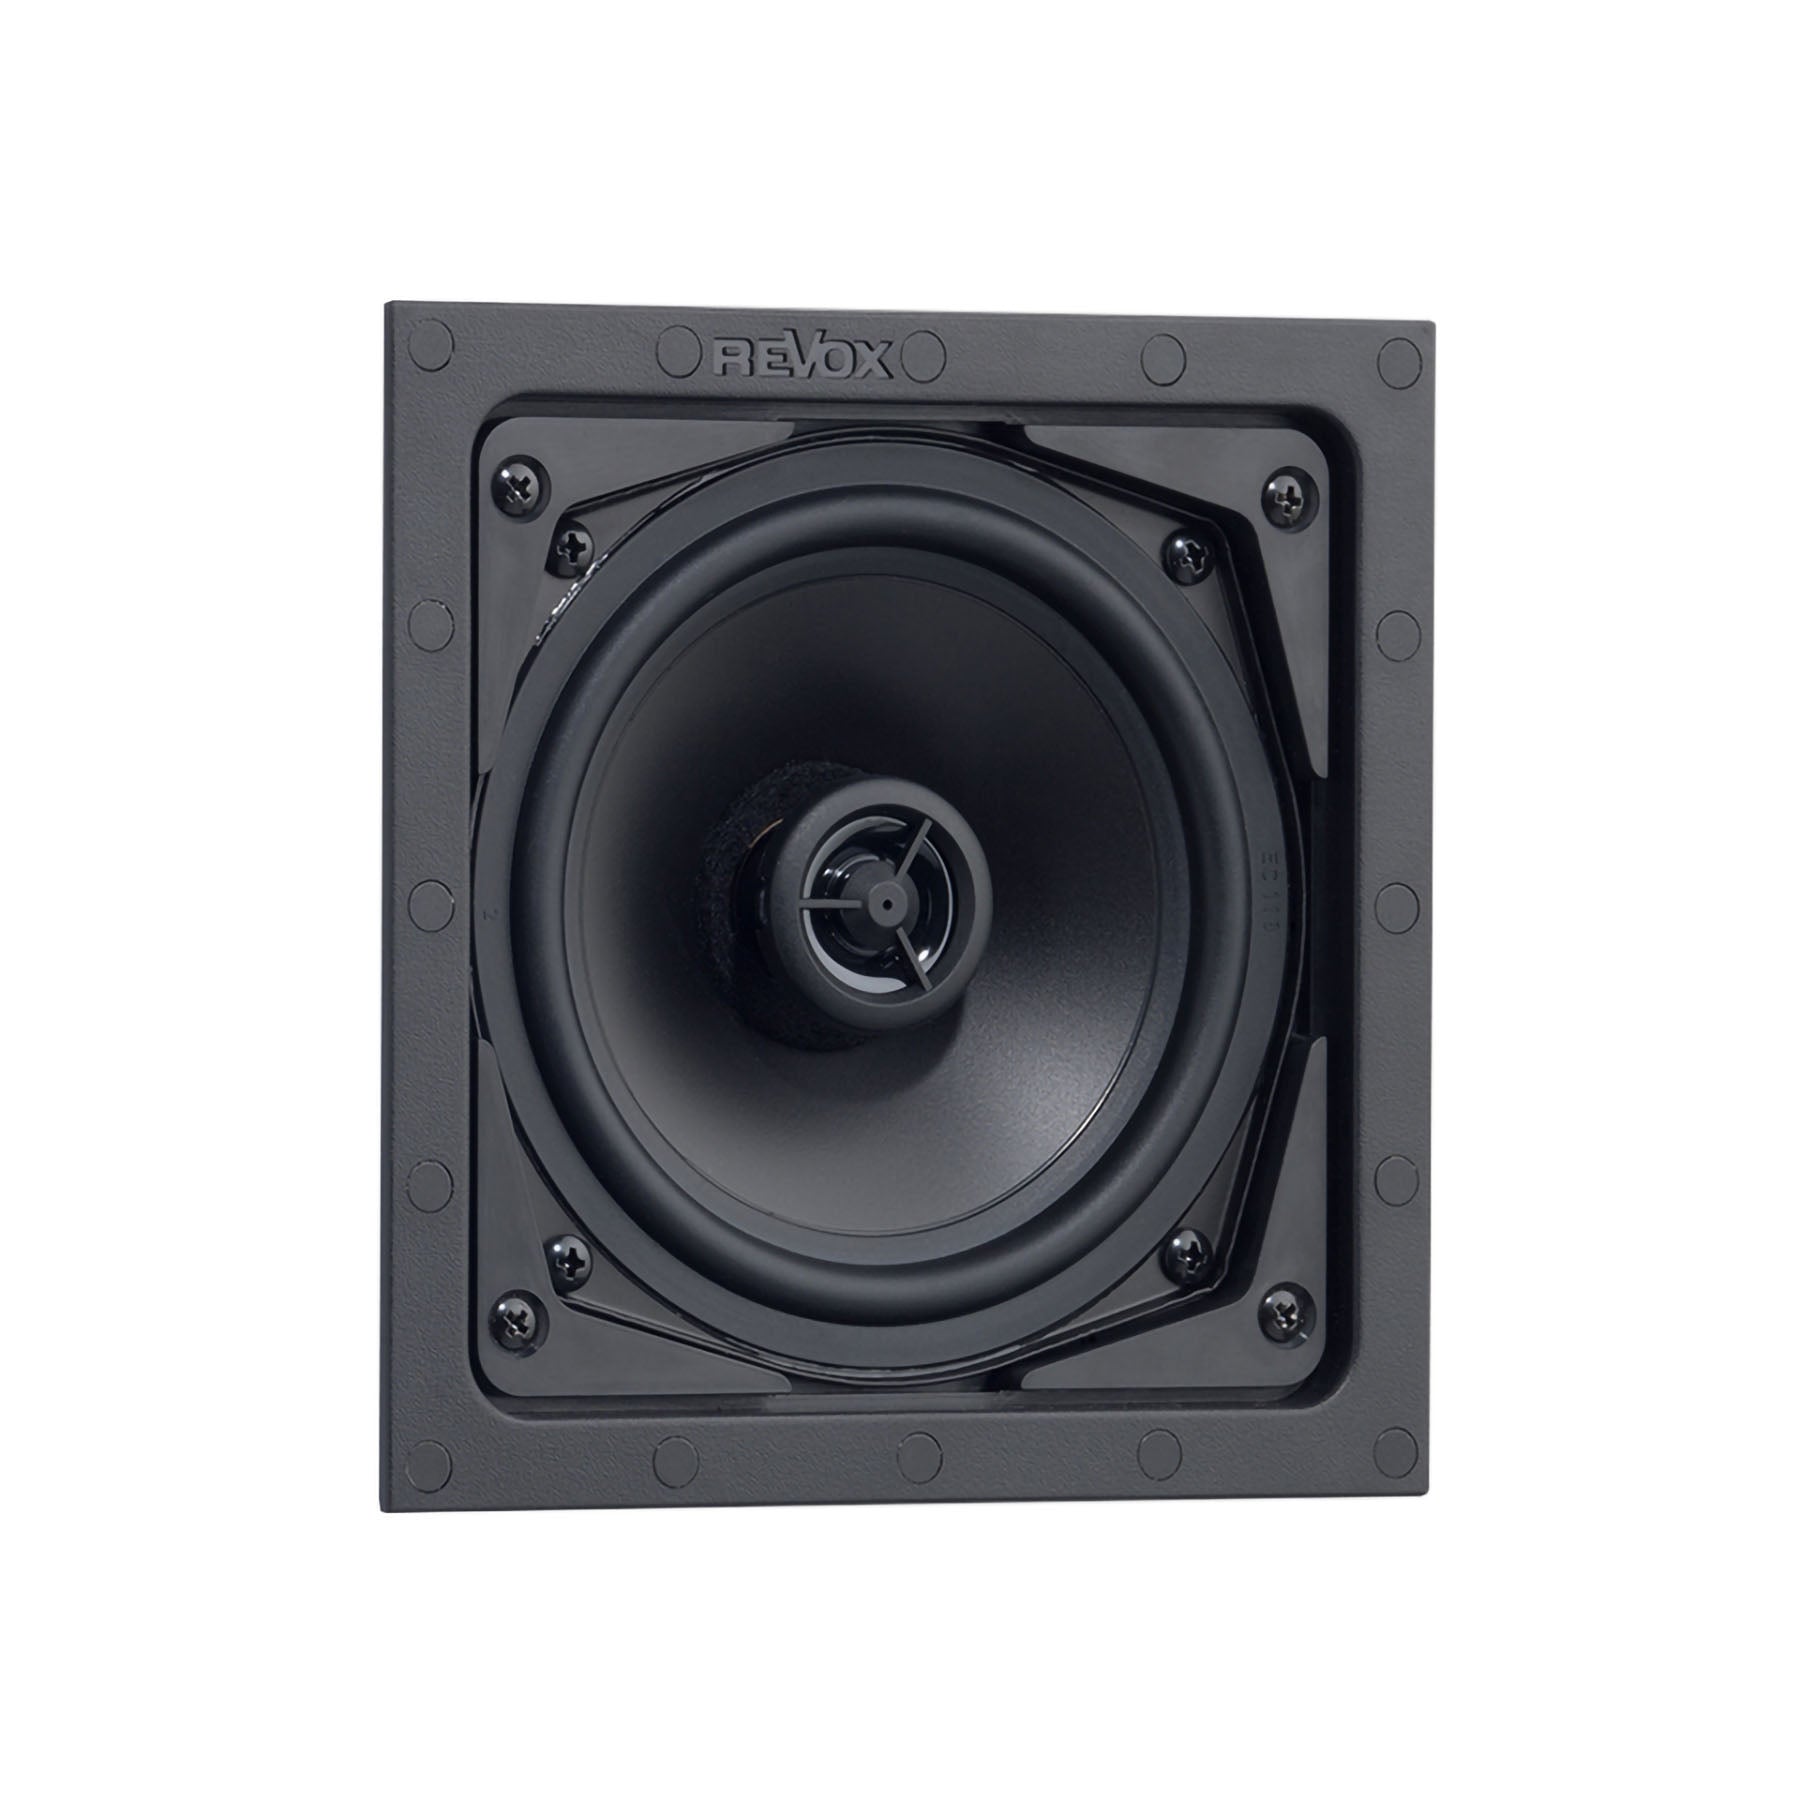 Revox Inwall I52 Built-In Speaker